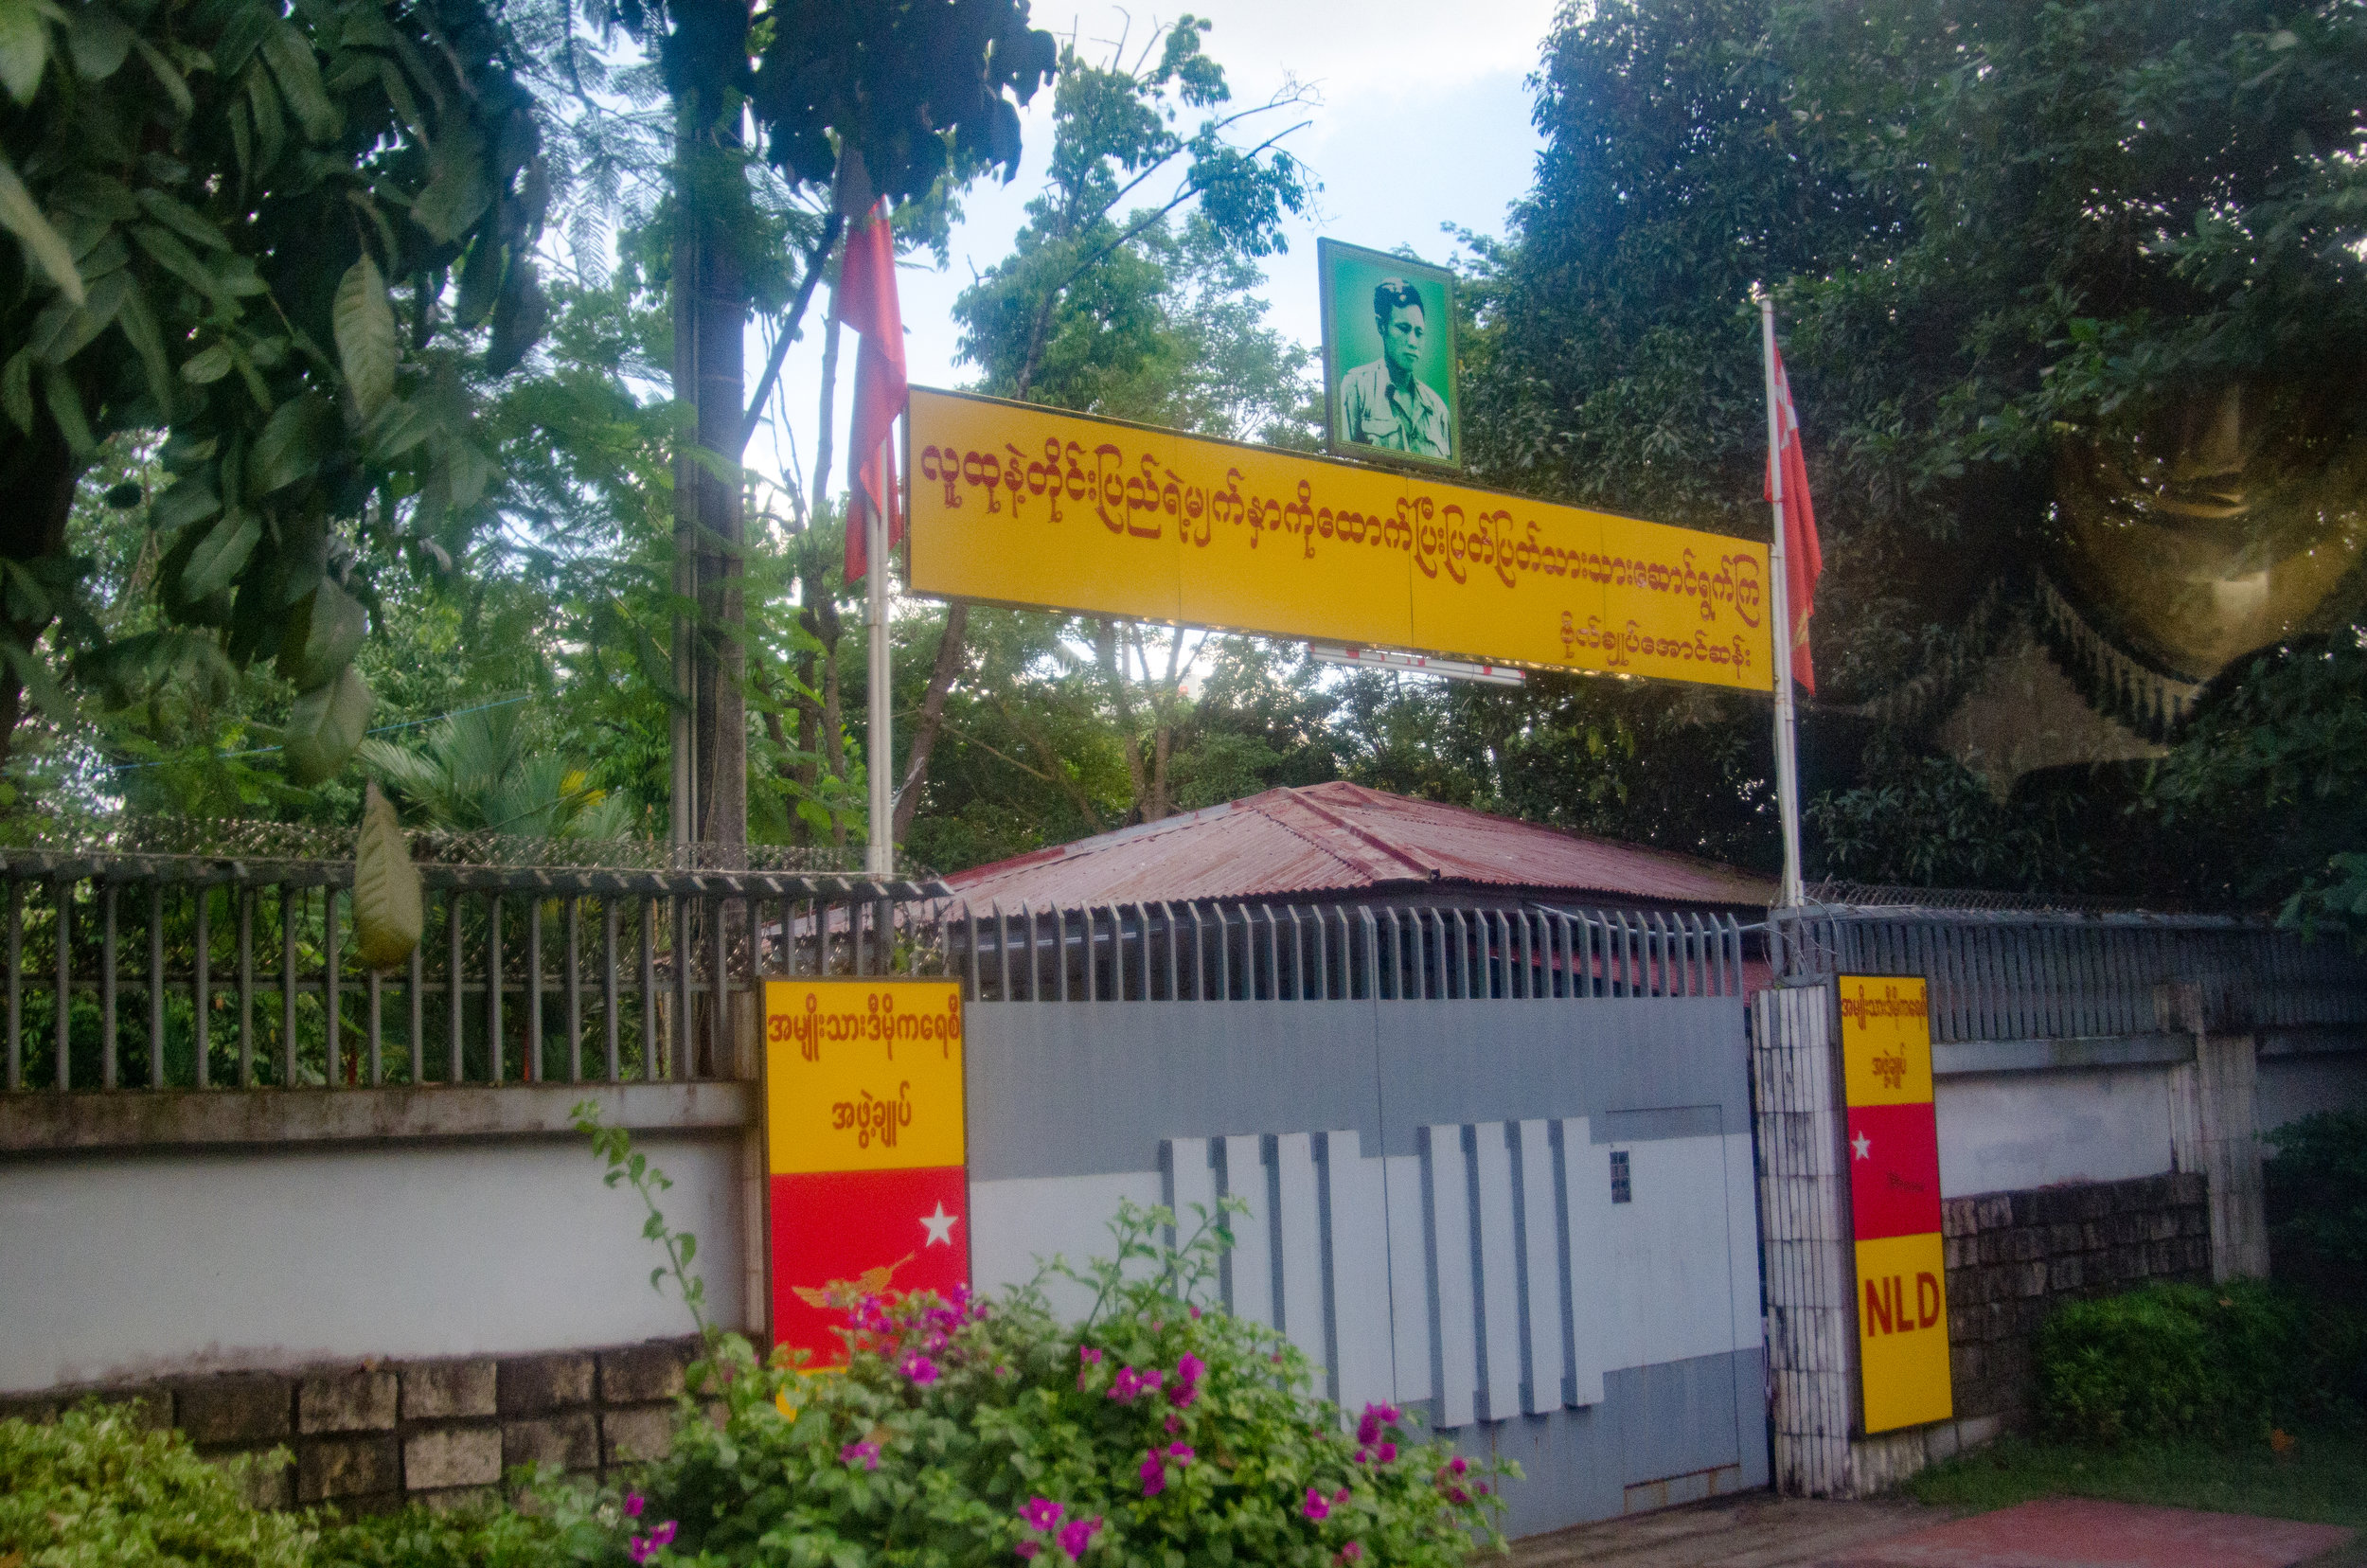 House where Aung San Suu Kyi was under house arrest, Yangon, Myanmar